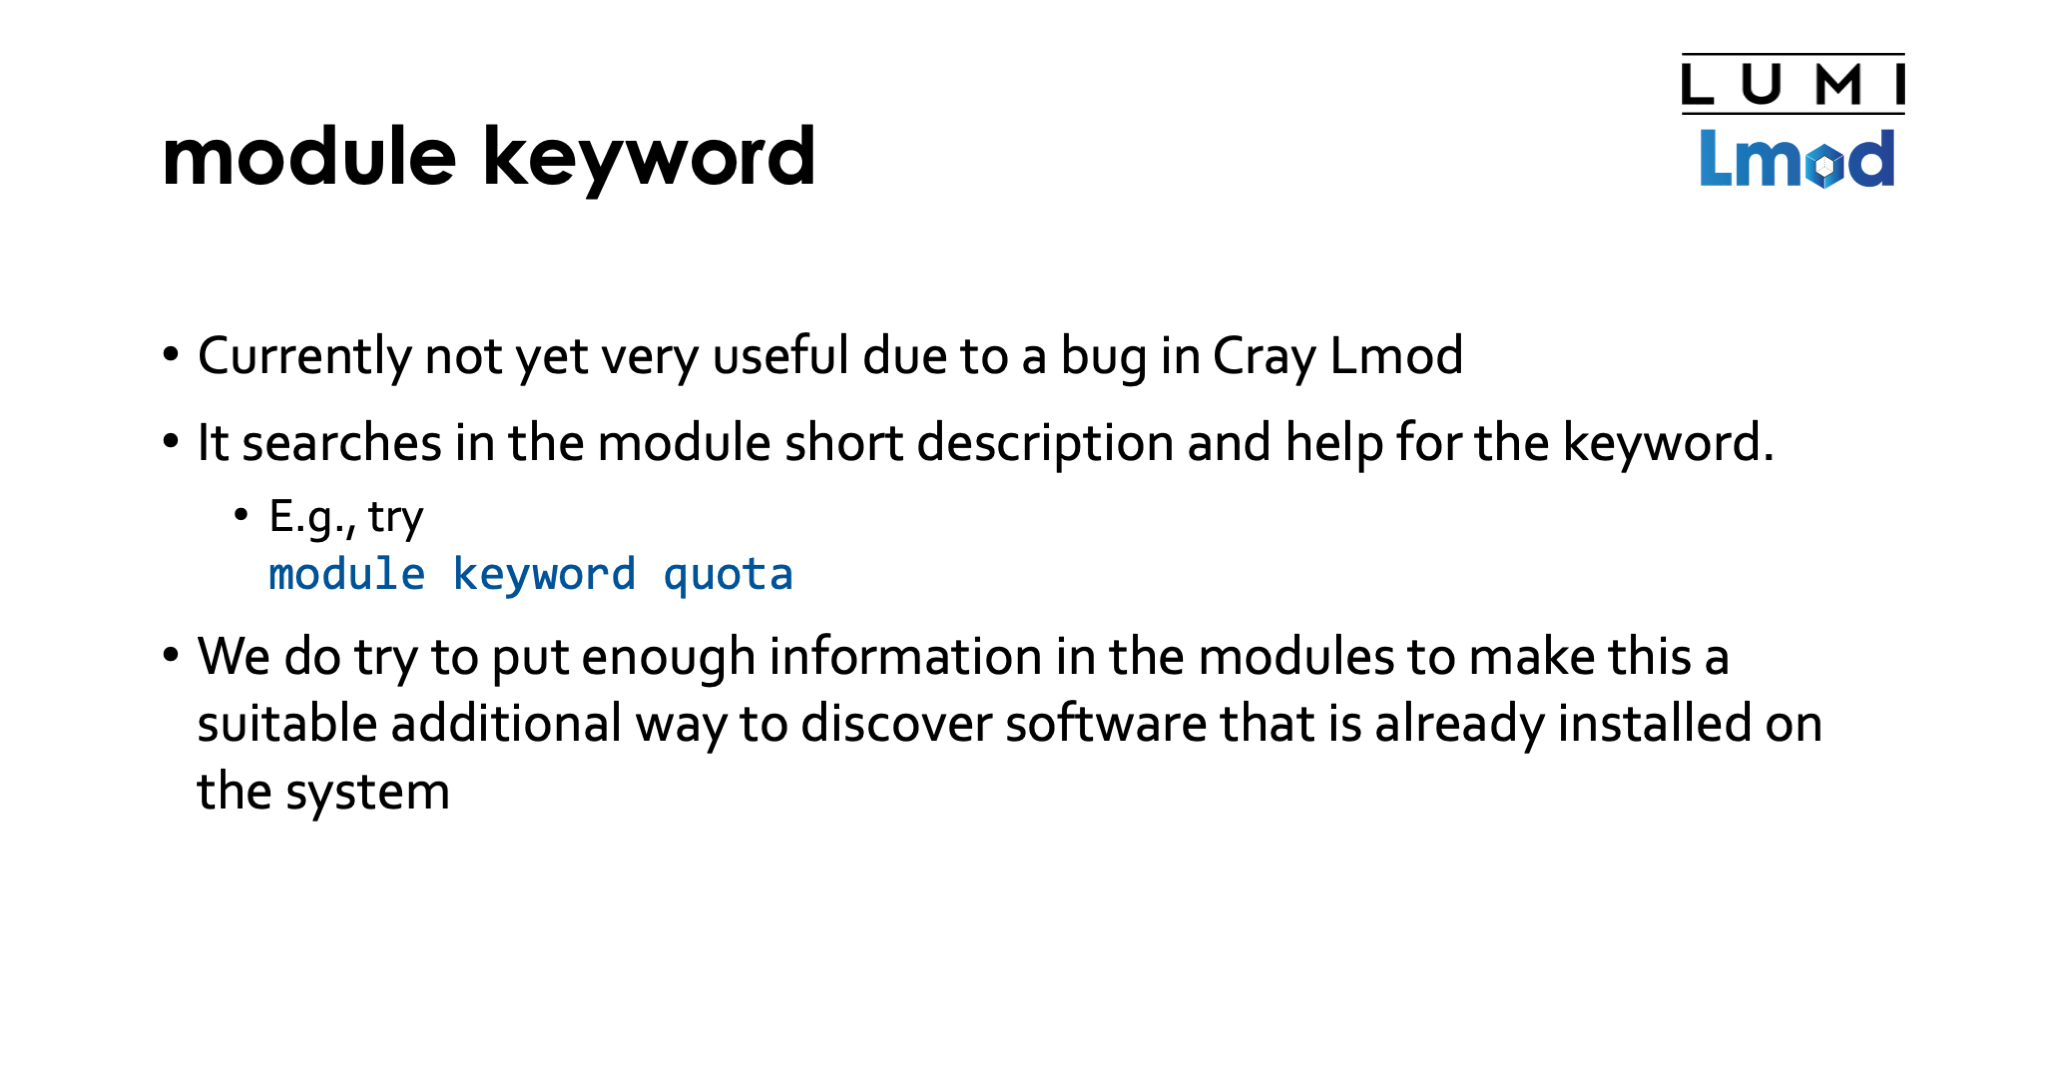 module keyword command